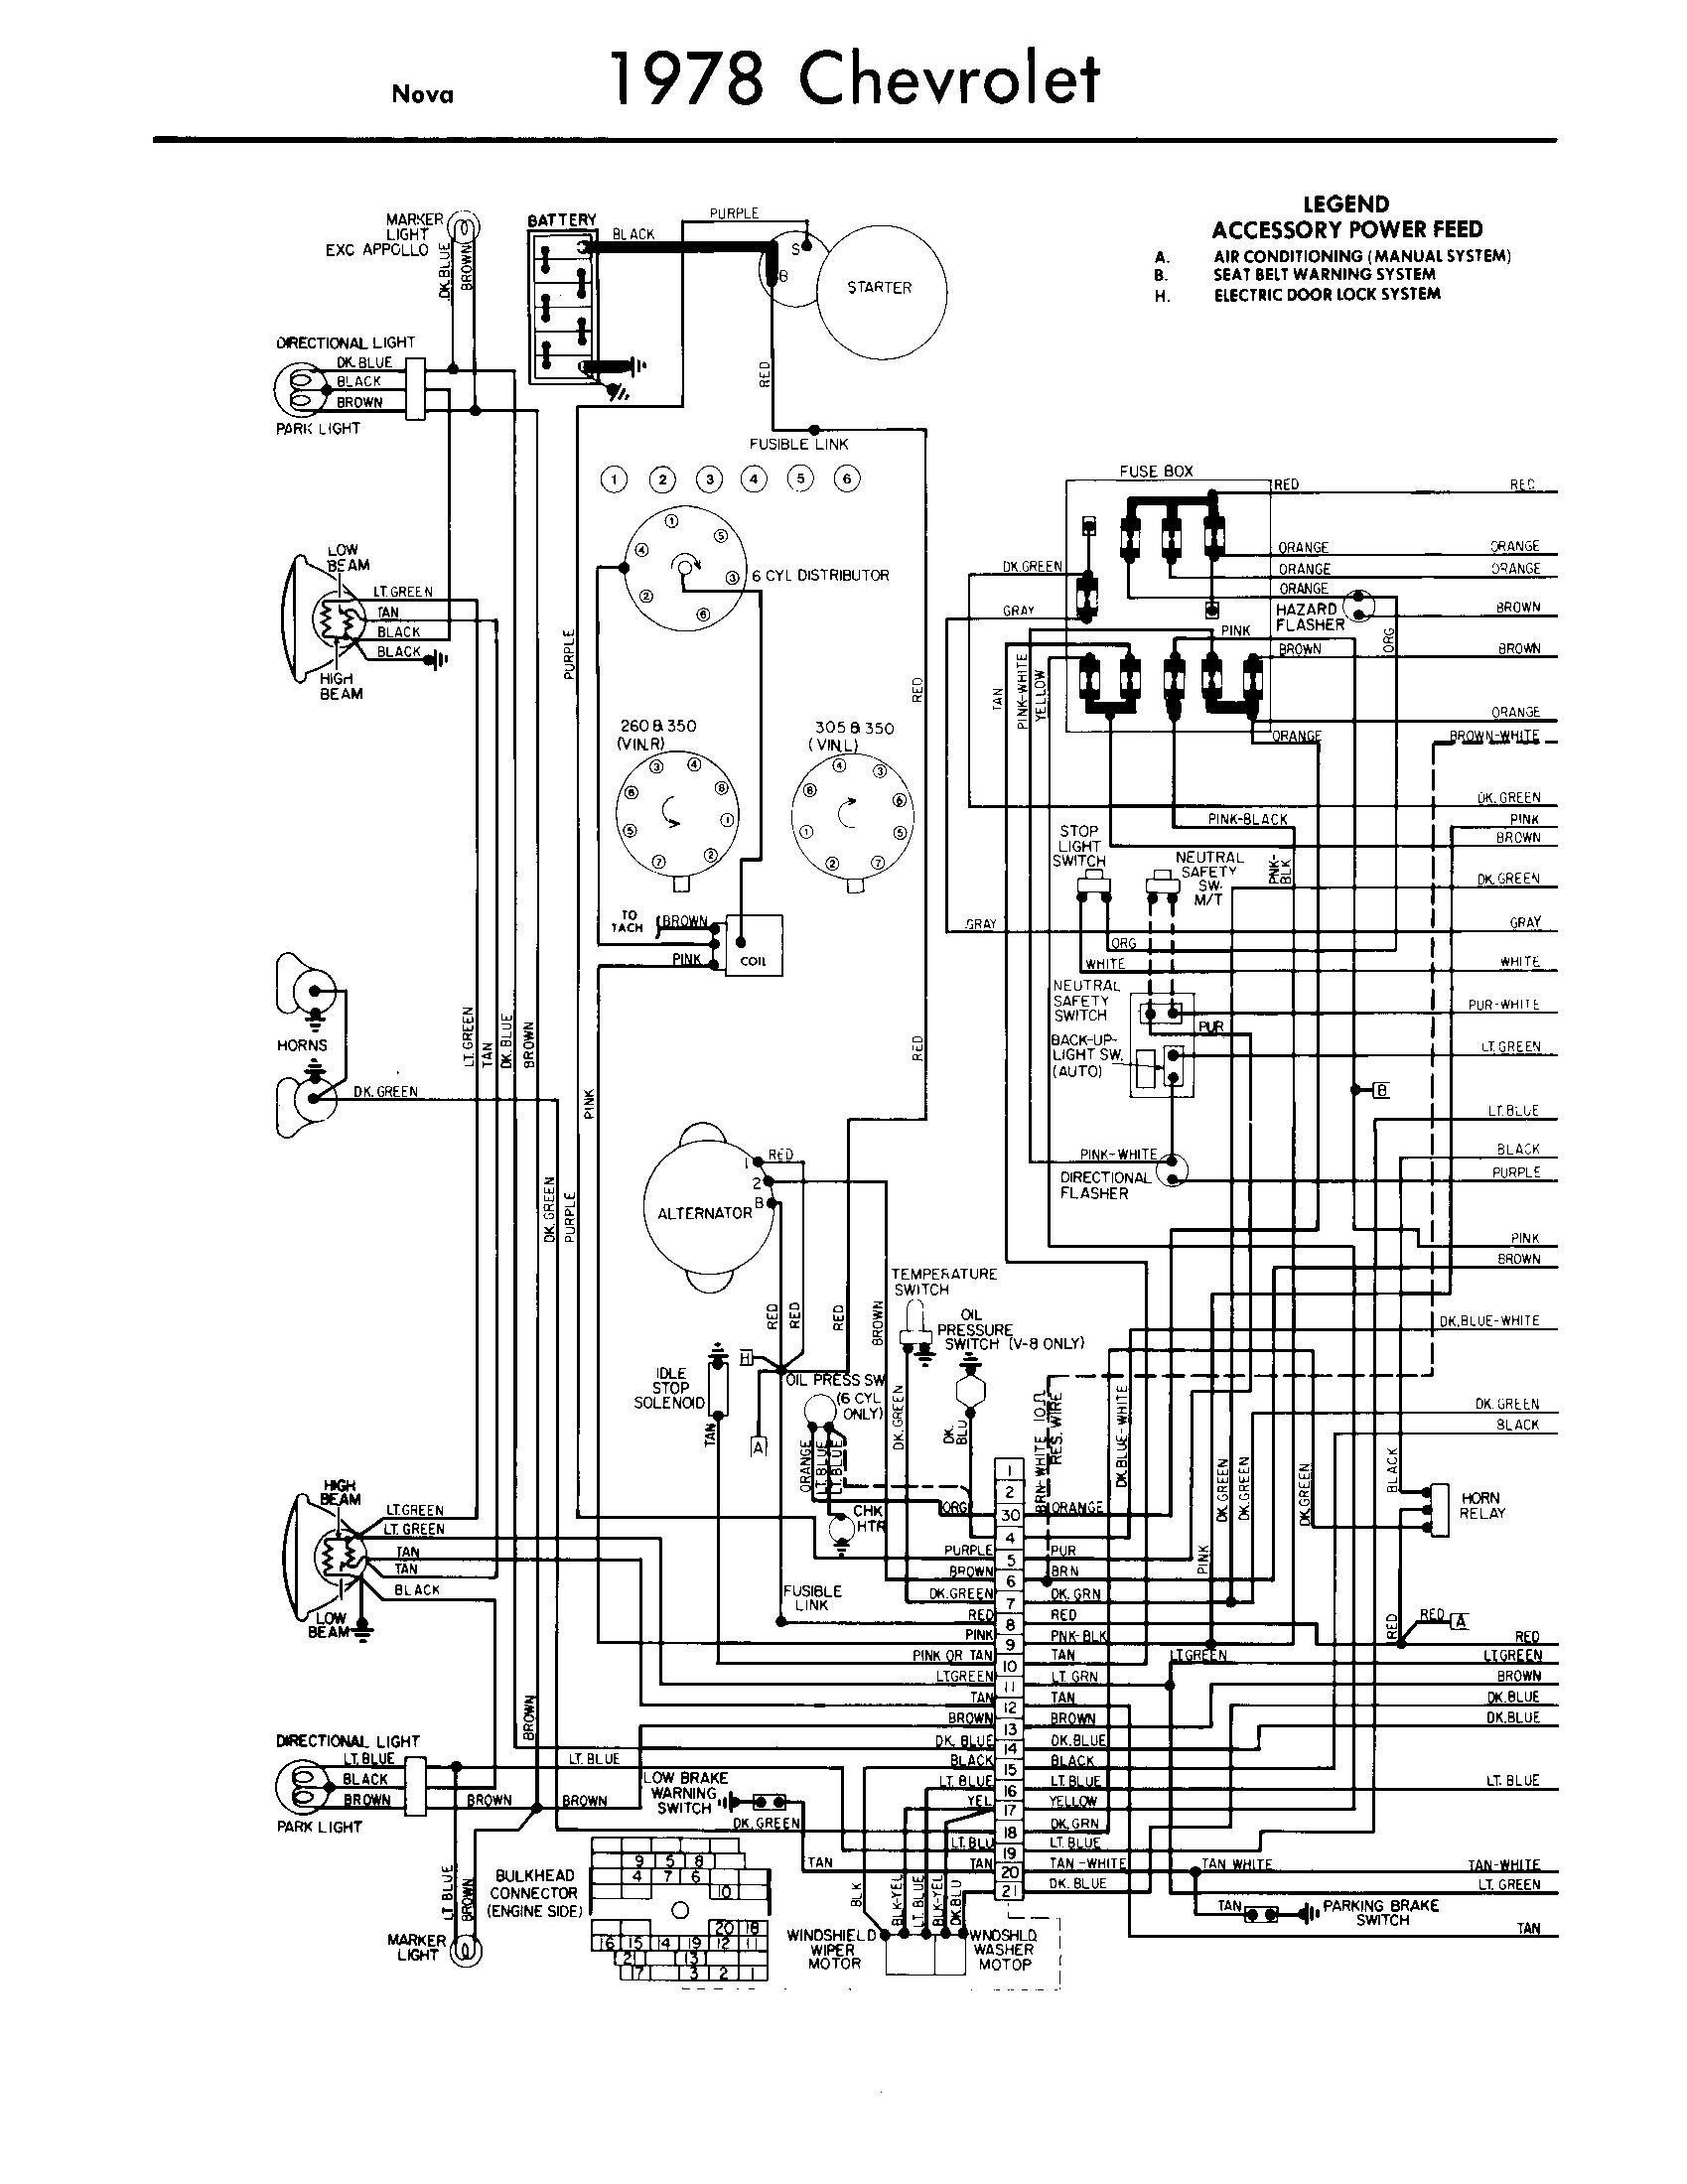 Chevrolet Alternator Wiring Diagram 1998 - Wiring Diagram